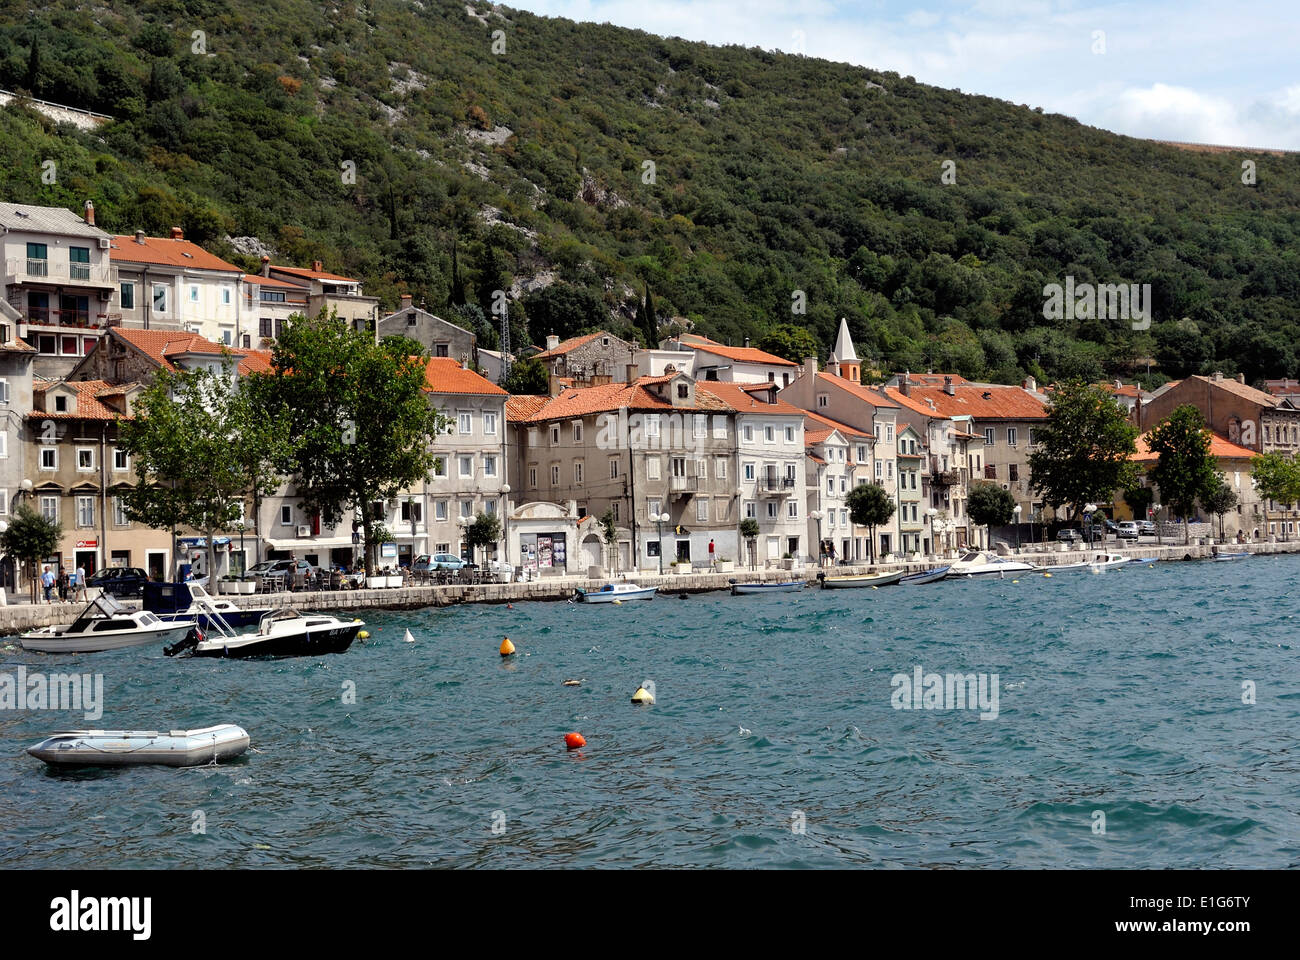 Historic old city of Bakar, Primorje region, Adriatic sea, Croatia, EU Stock Photo